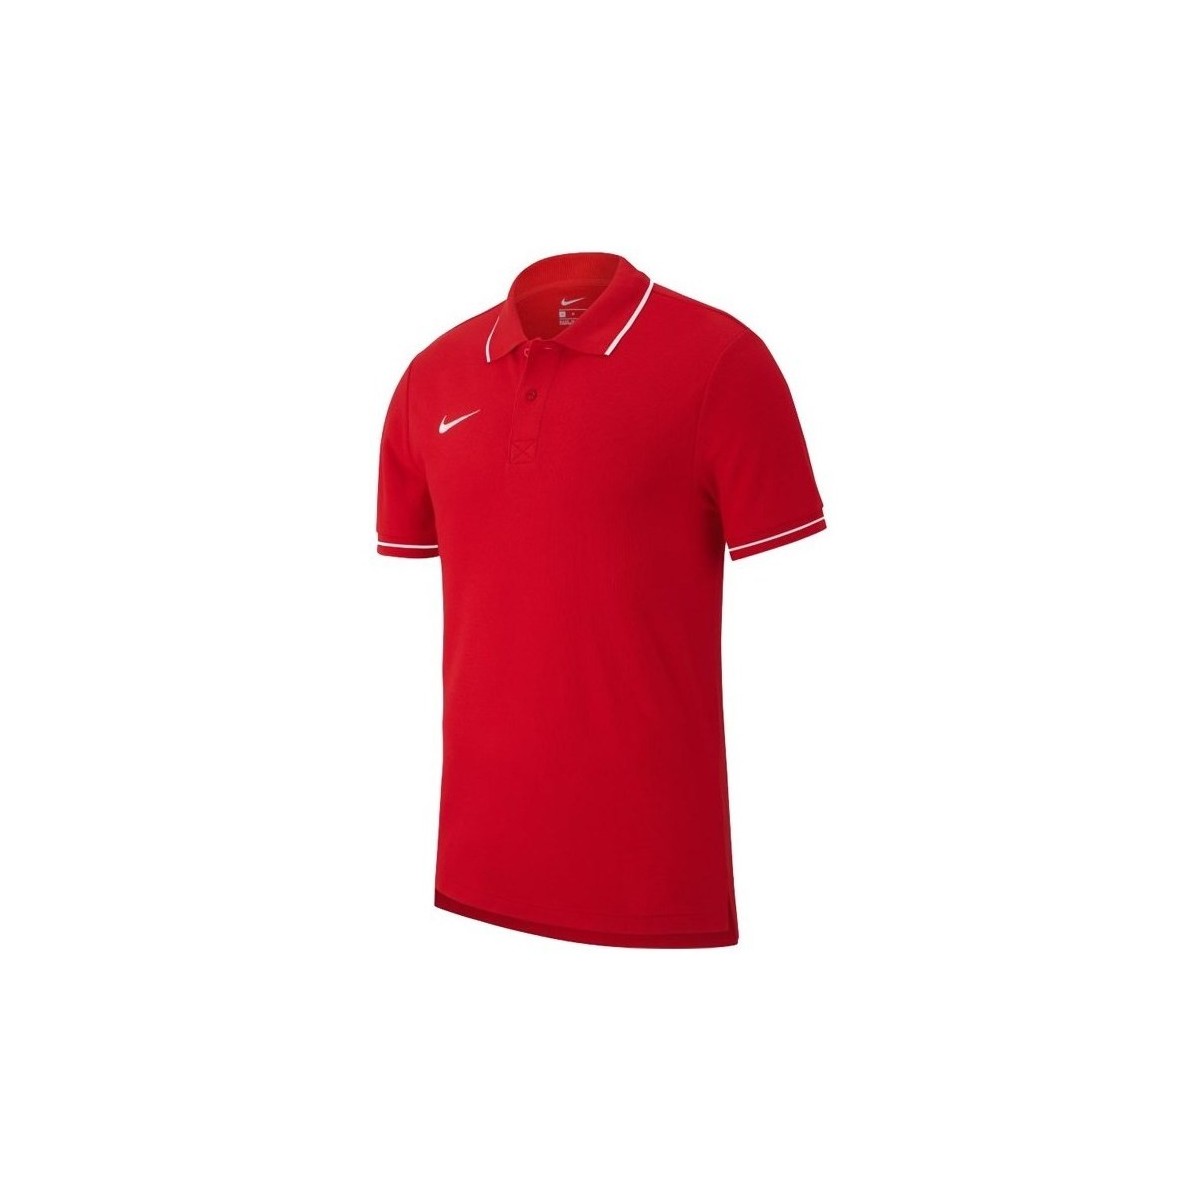 Vêtements Homme T-shirts manches courtes Nike Team Club 19 Rouge